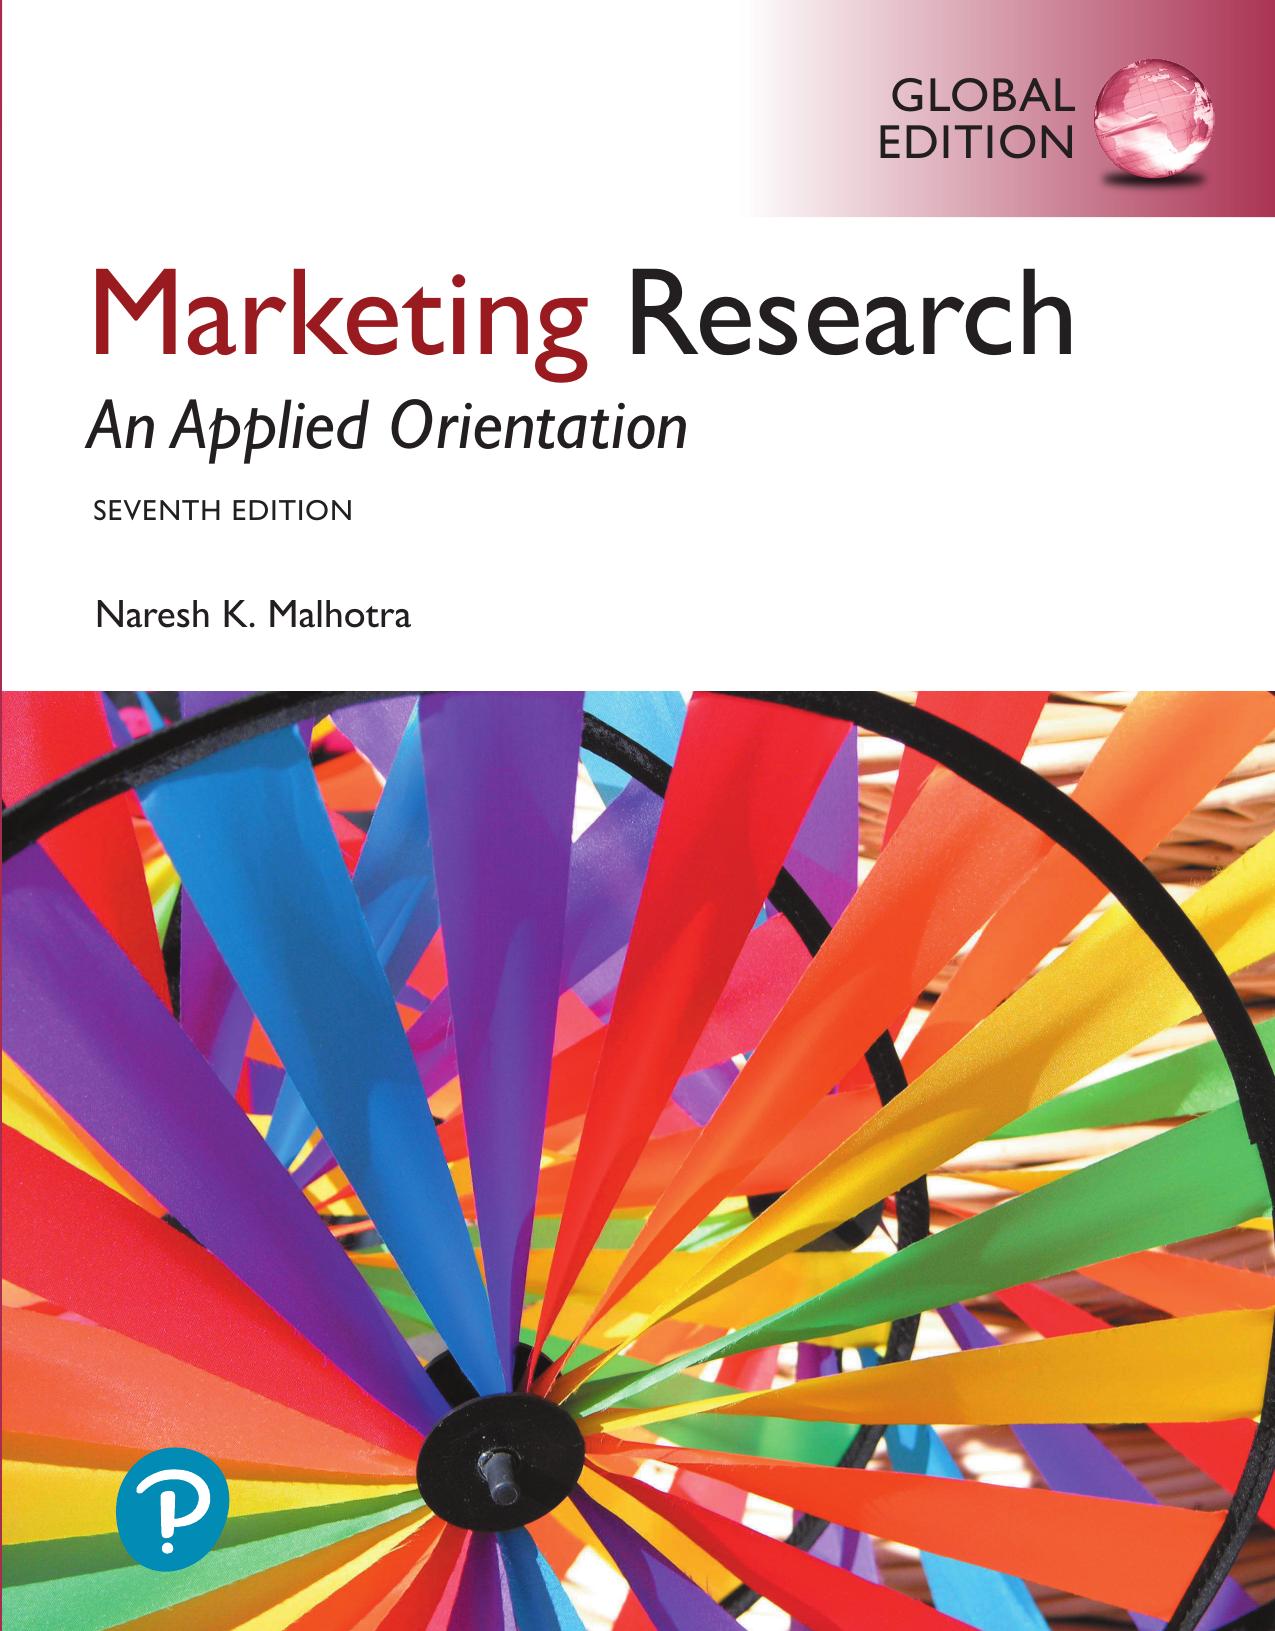 (eBook PDF)Marketing Research An Applied Orientation 7th Global Edition by Naresh Malhotra